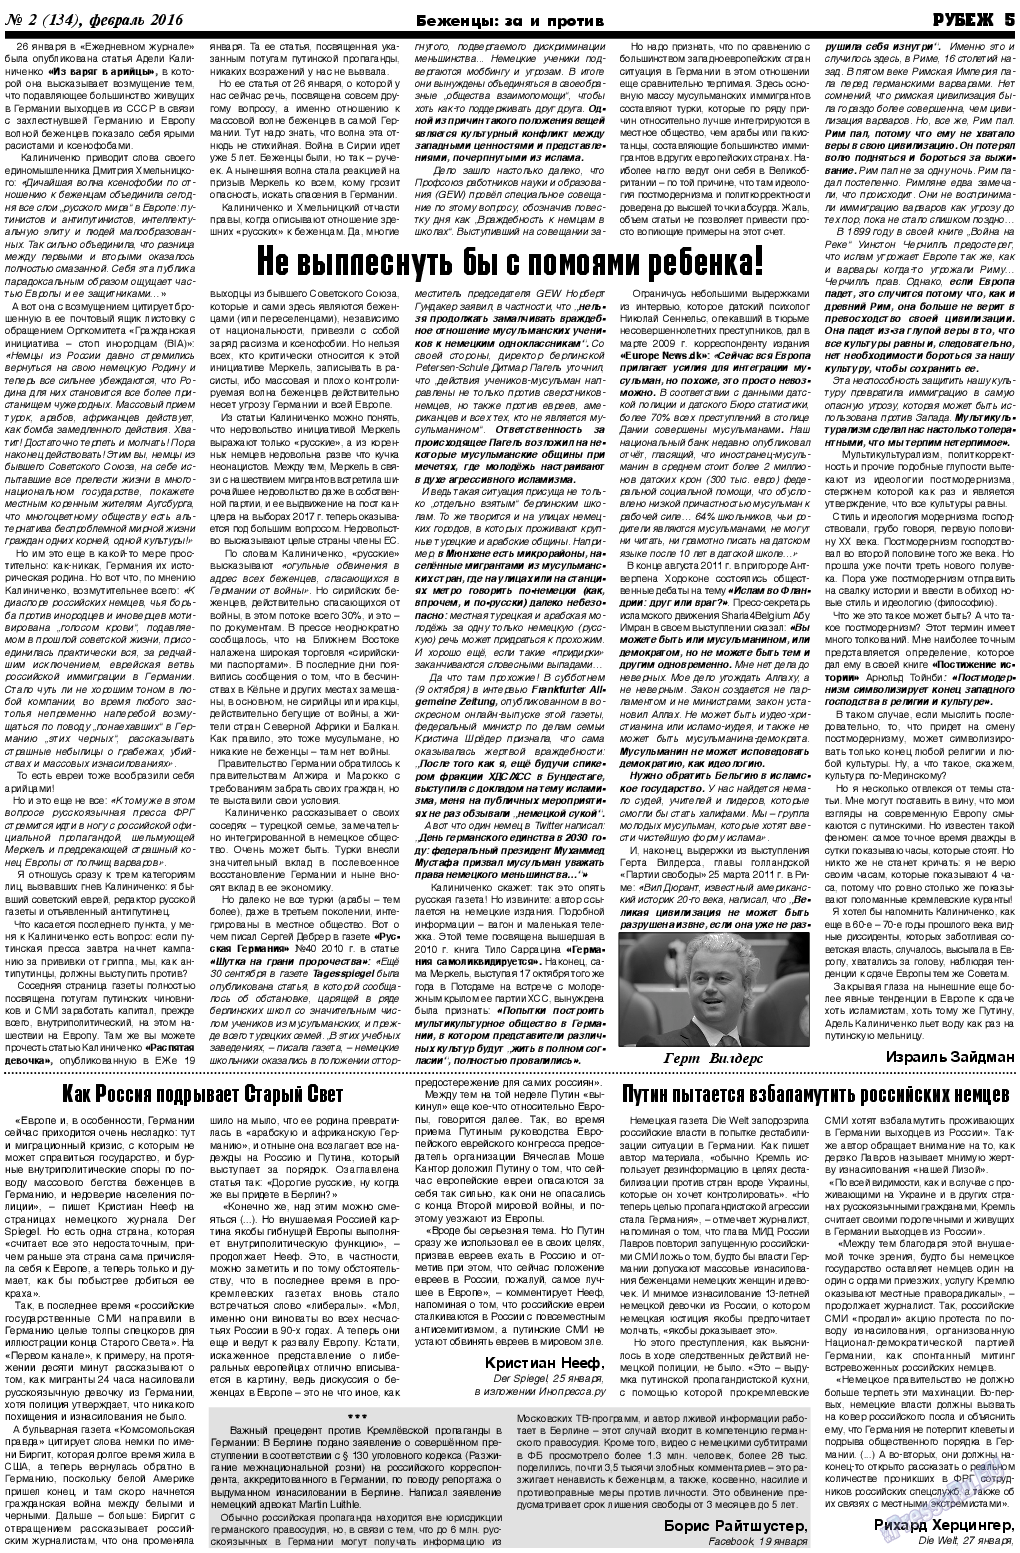 Рубеж, газета. 2016 №2 стр.5